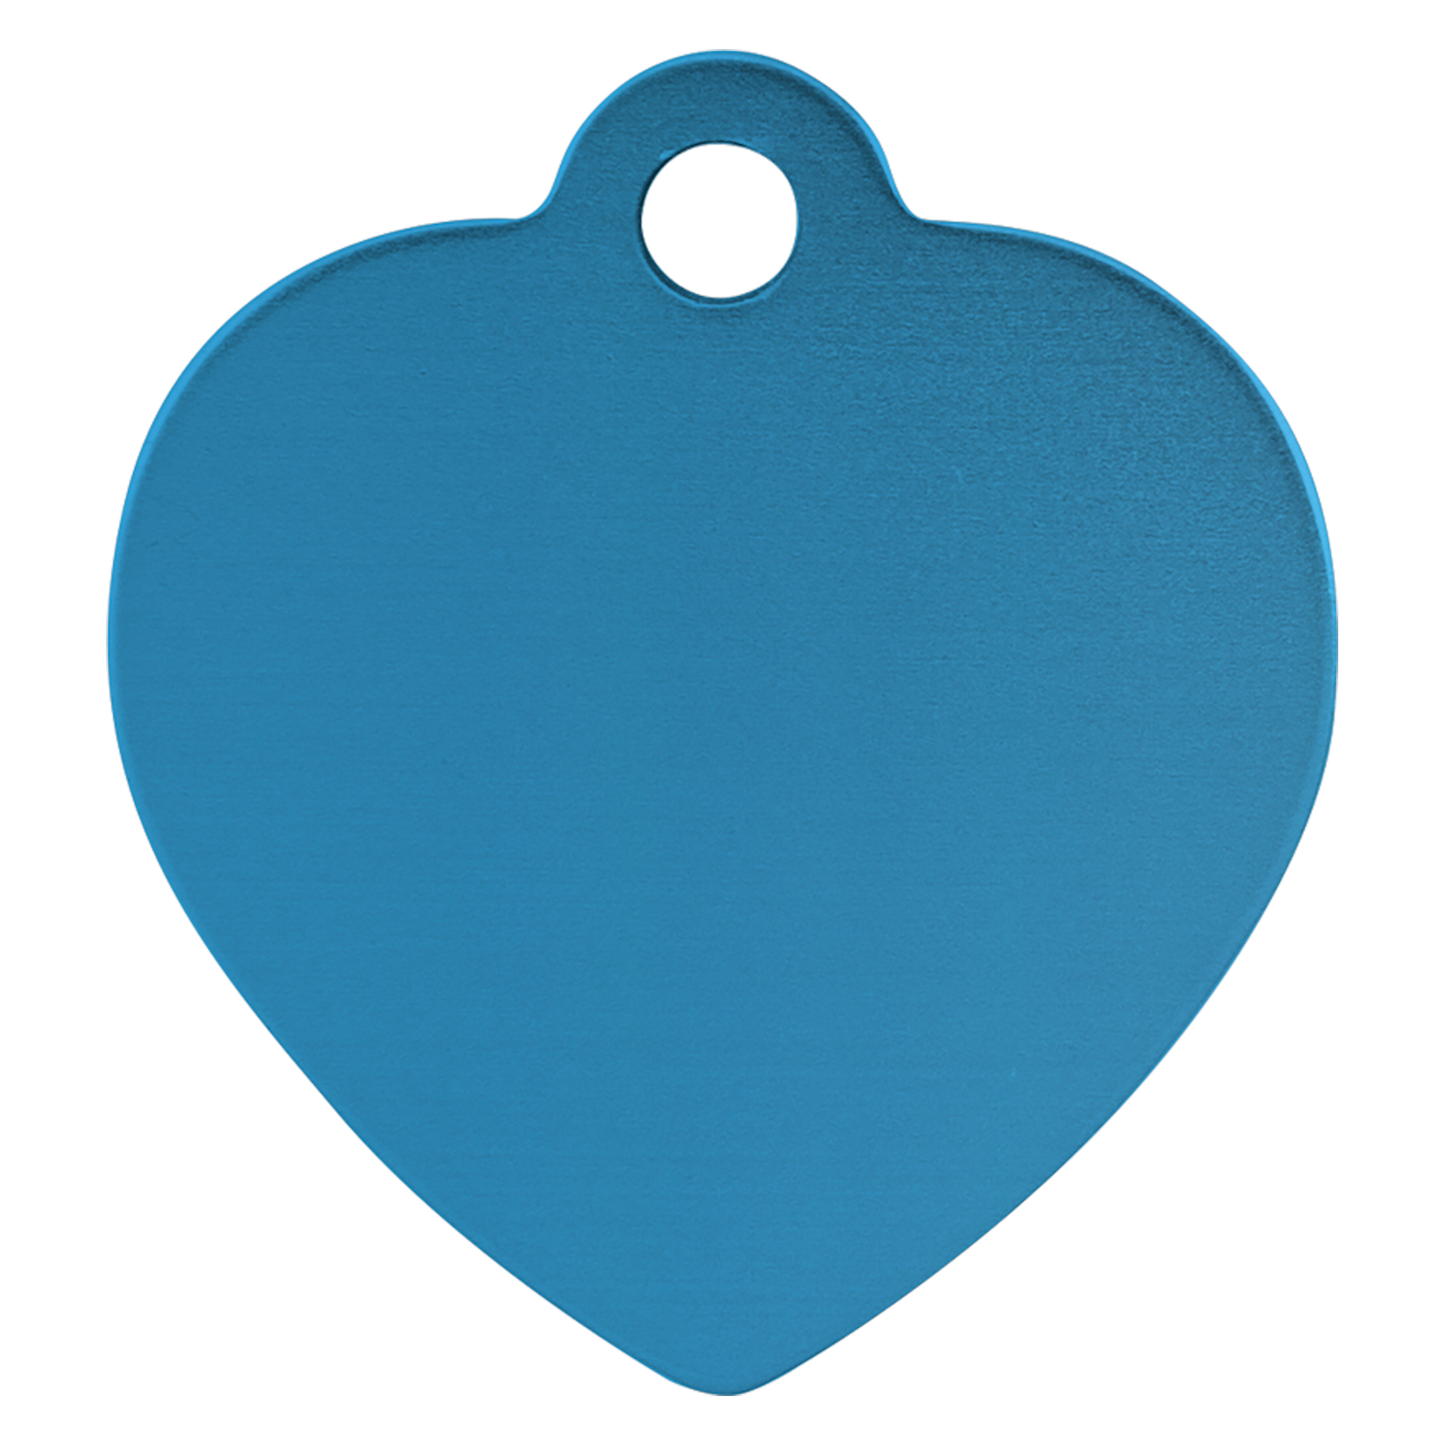 B.O.G.O. SMALL 1" x 1" Blue Anodized Aluminum Heart Pet Tag